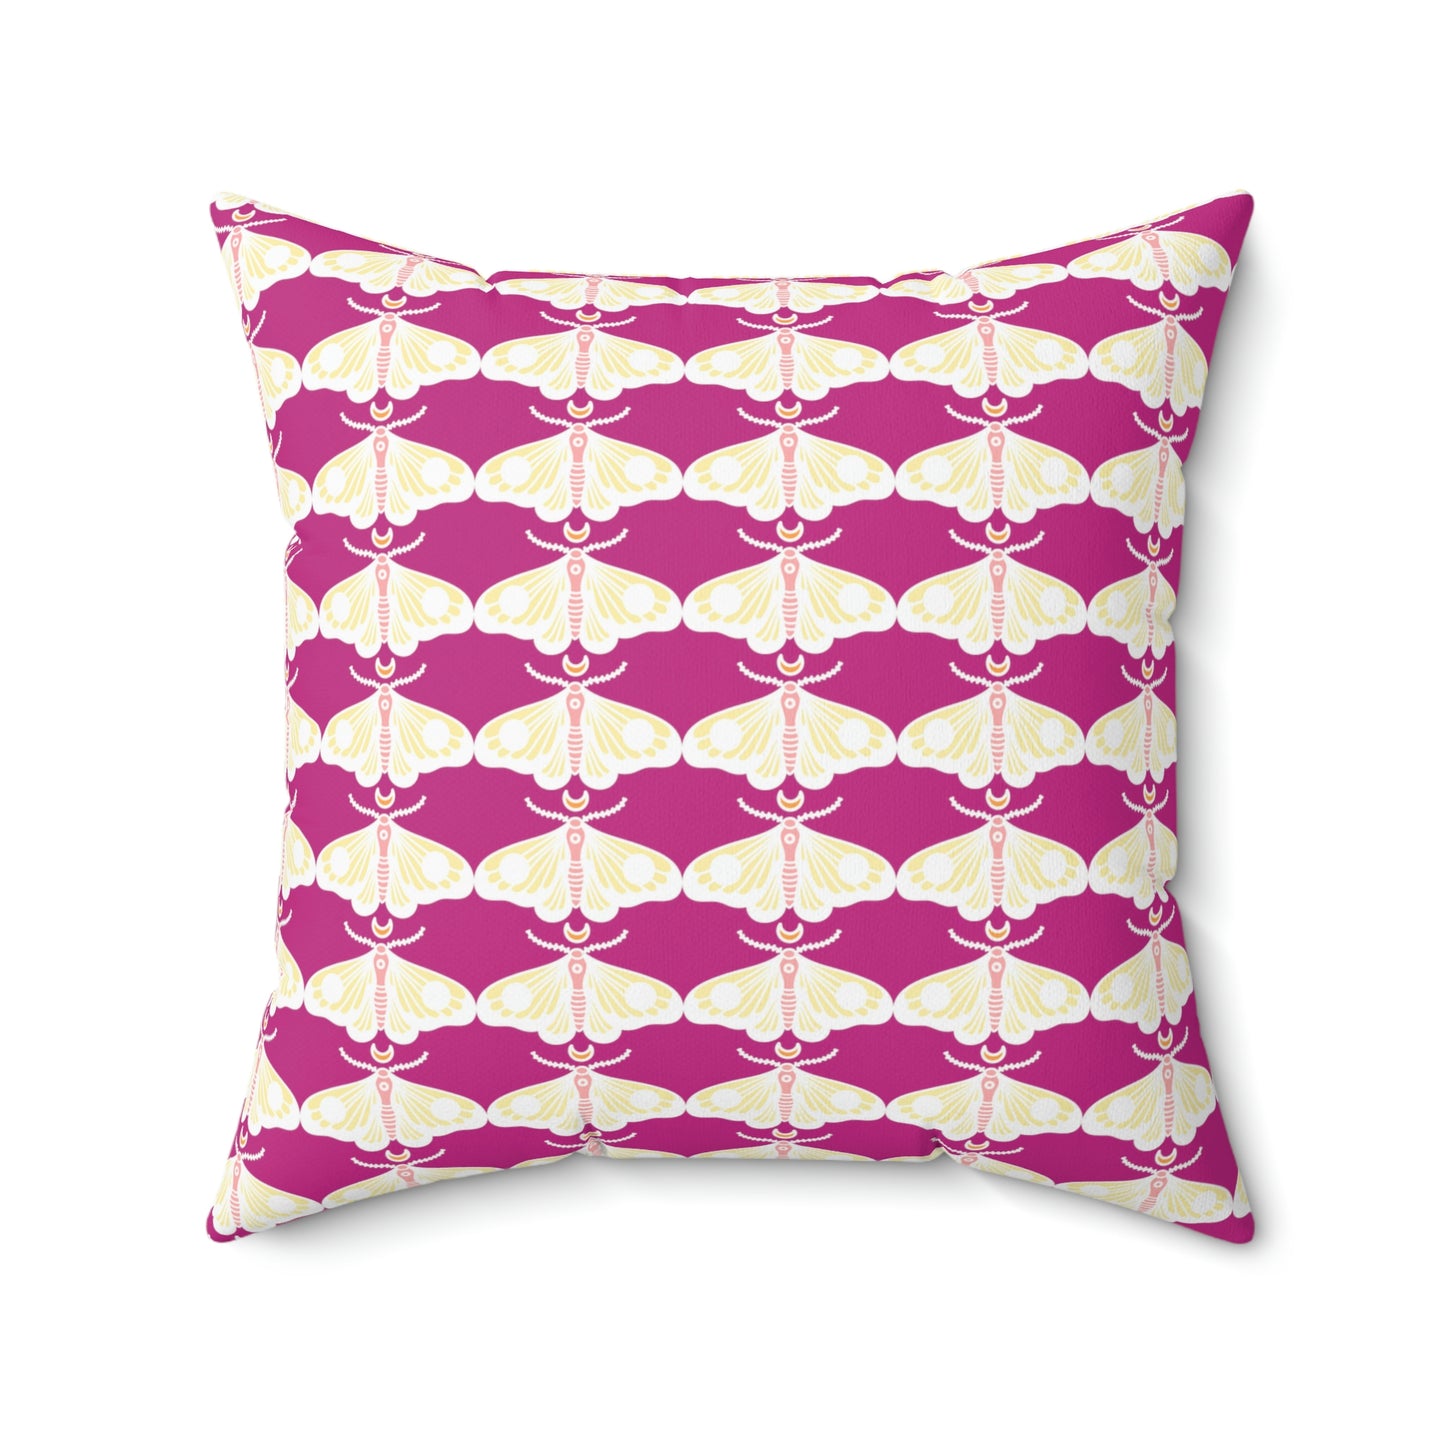 Spun Polyester Square Pillow Case “Moth White Pattern on Pink”